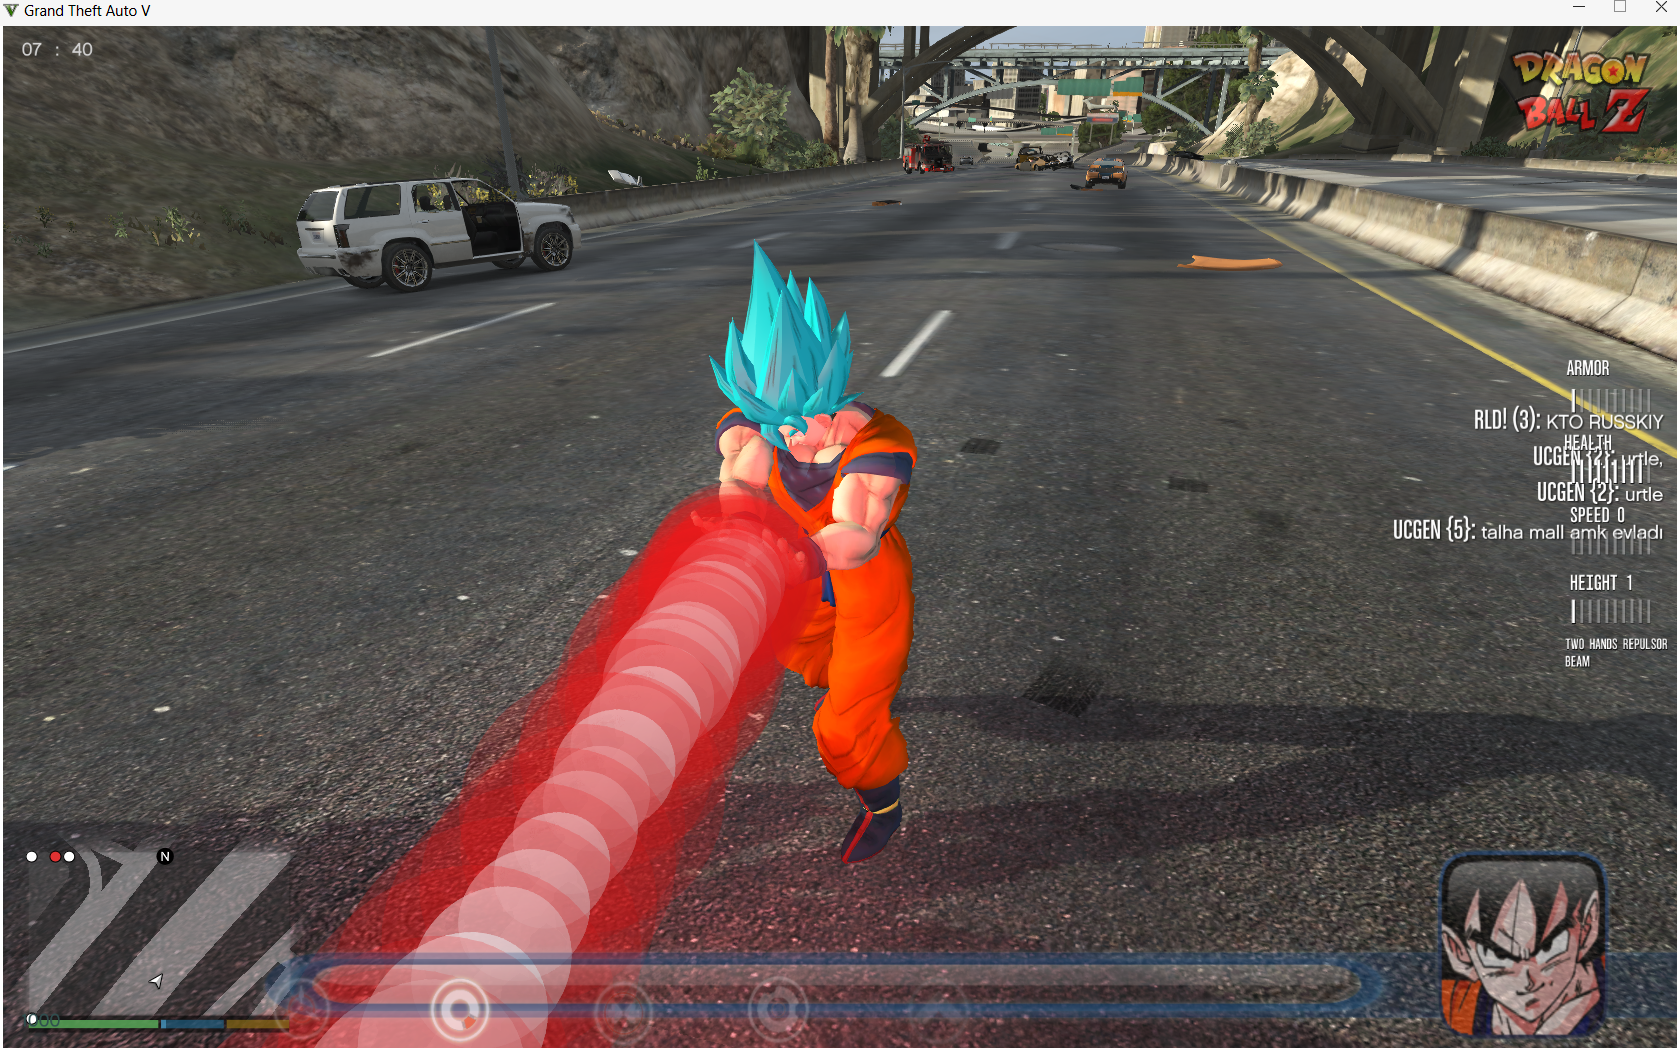 Dragon Ball Z Goku With Powers Sounds And Hud Mod For Grand Theft Auto V Mod Db